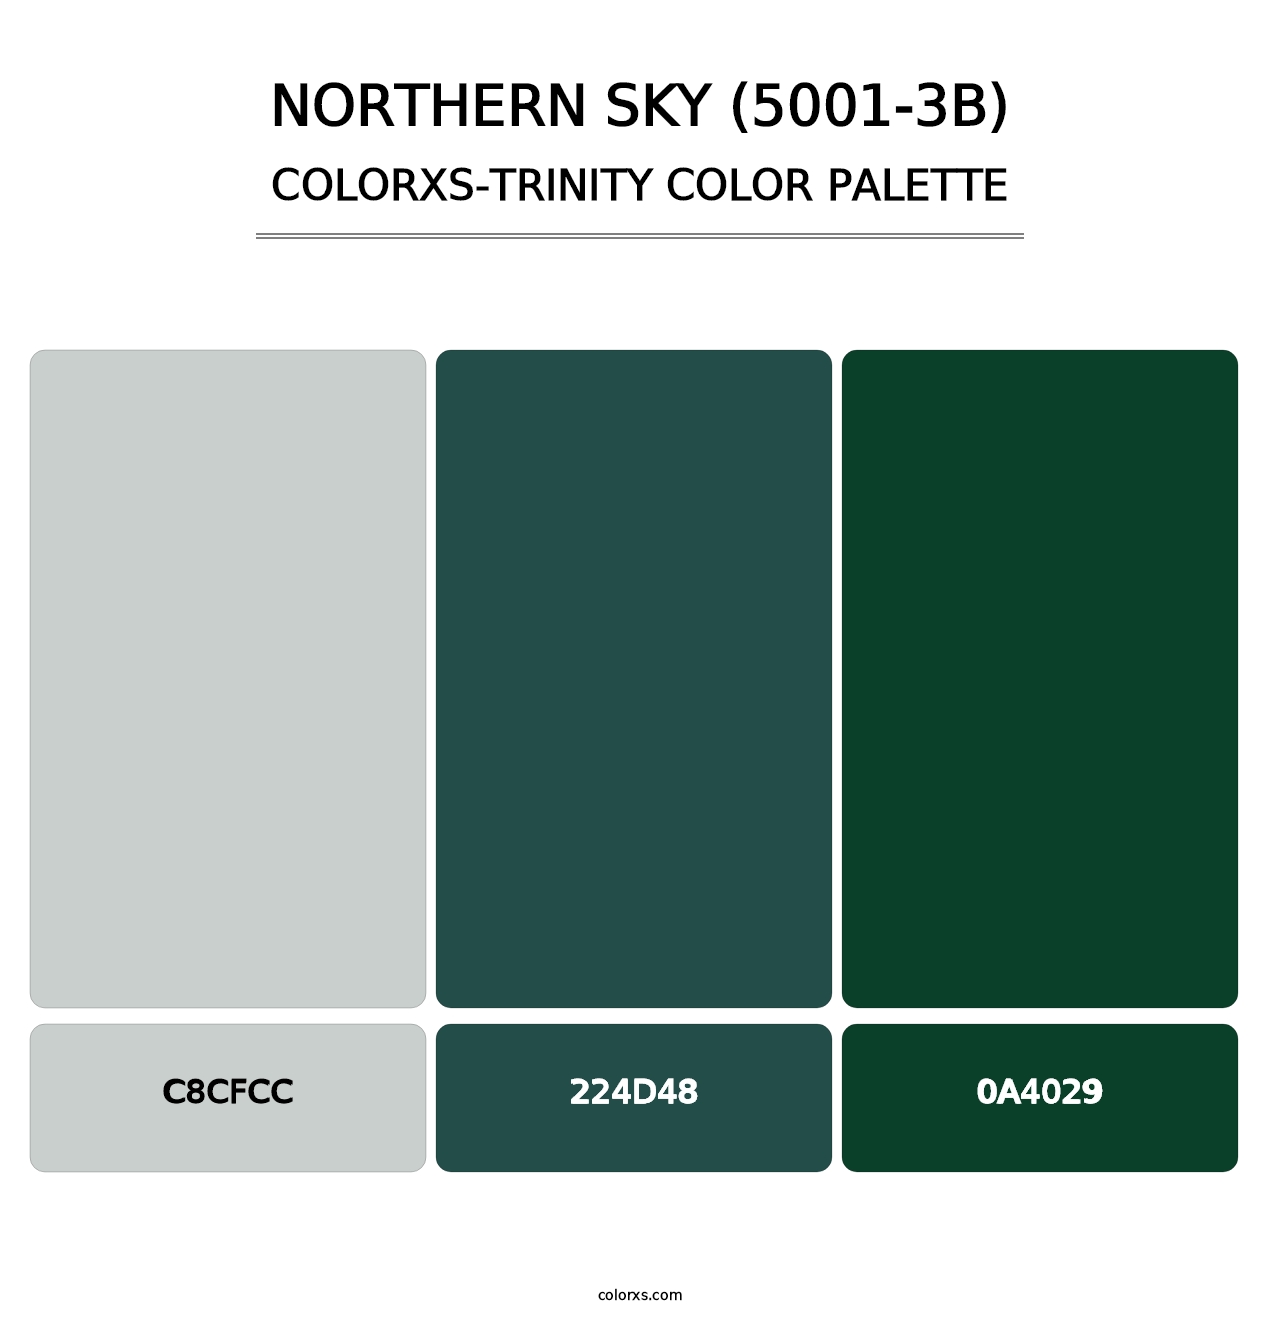 Northern Sky (5001-3B) - Colorxs Trinity Palette